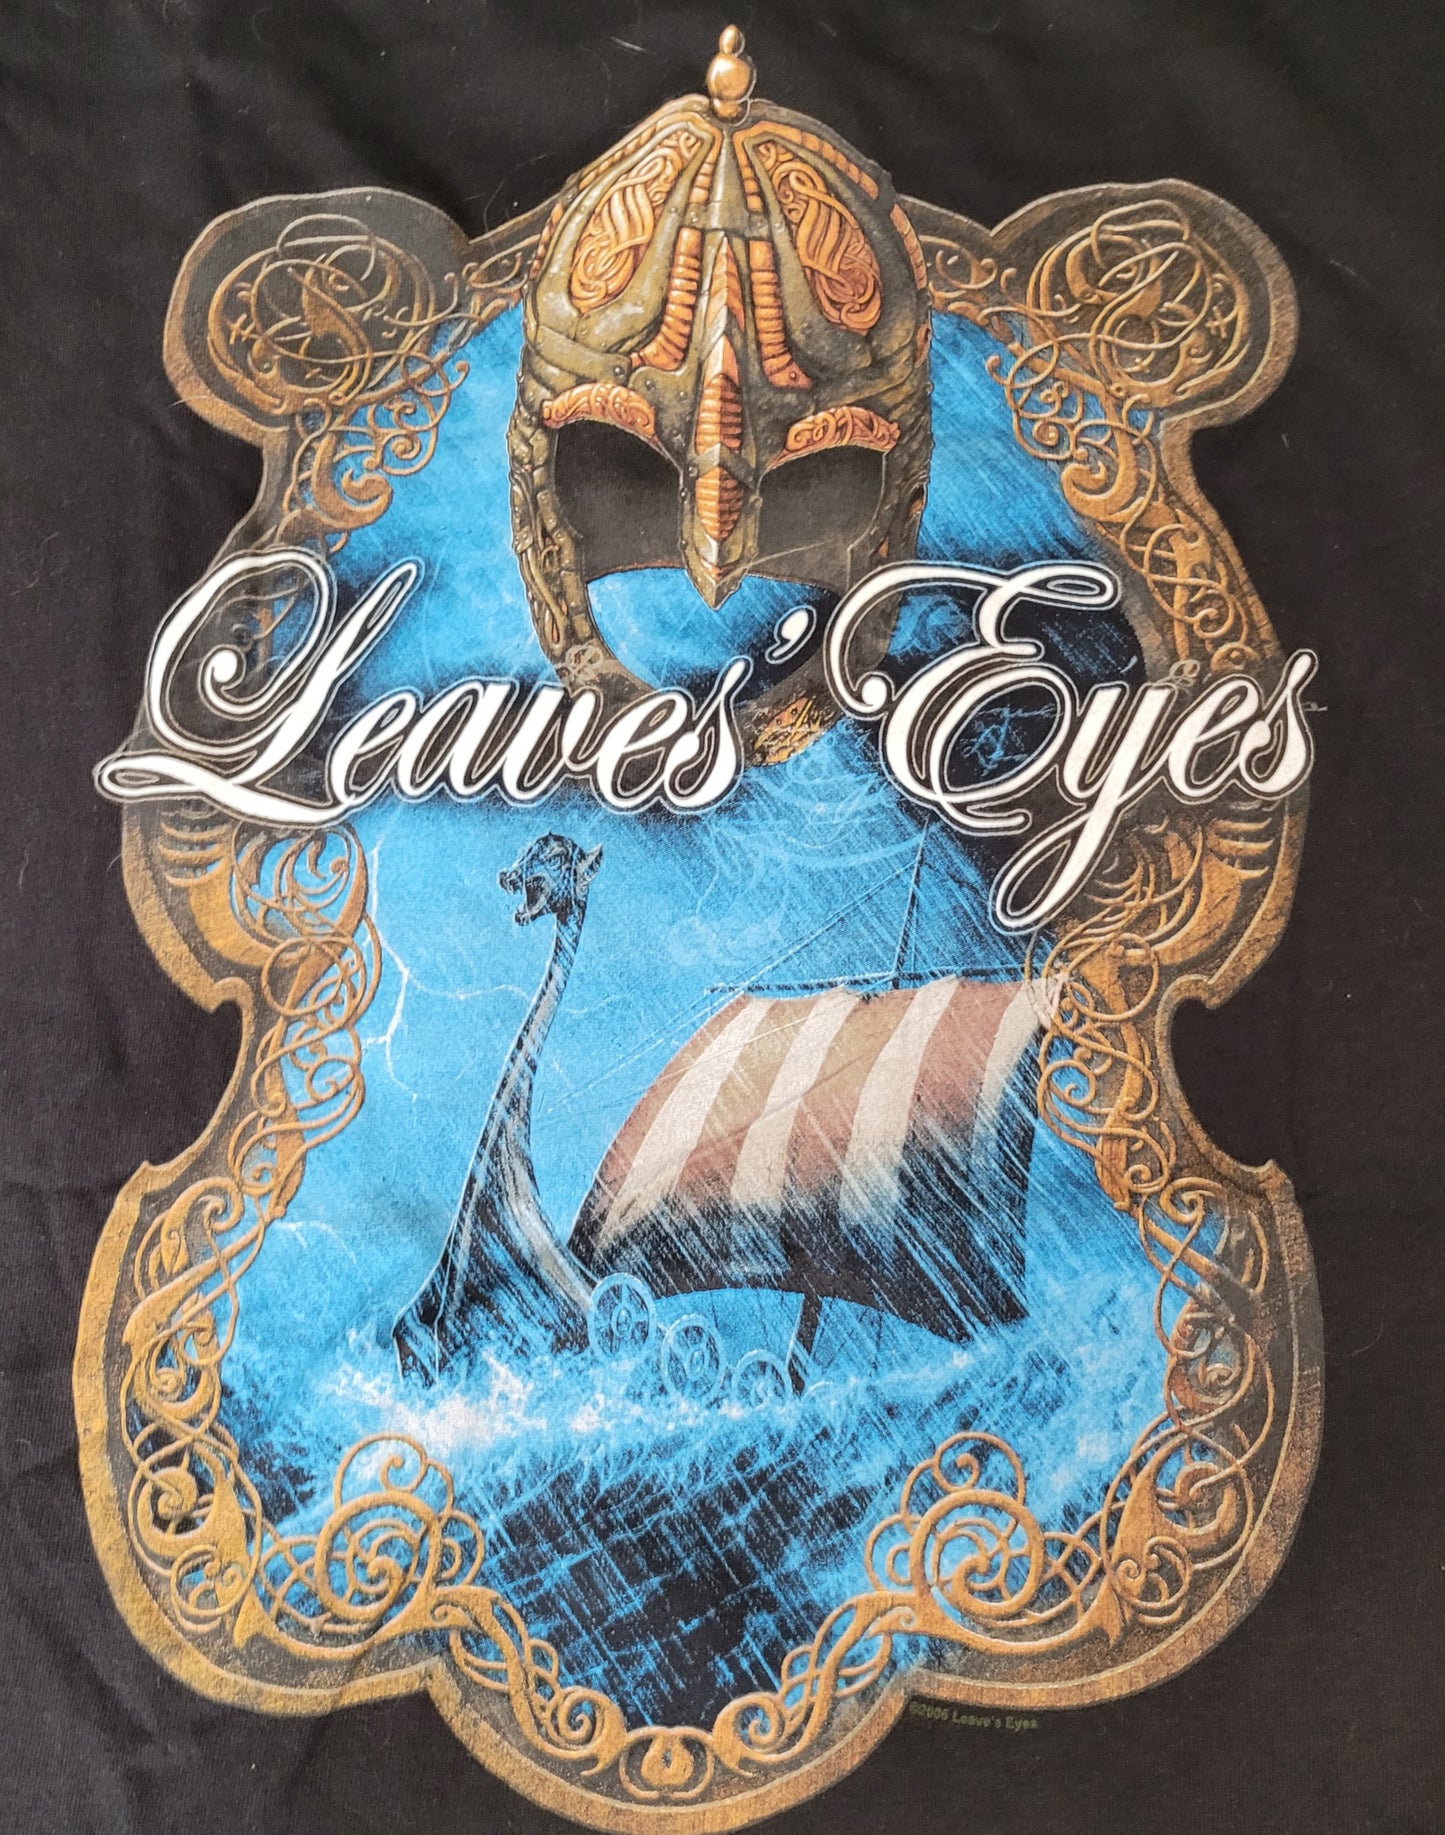 Leaves' Eyes - Vinland Saga Tour, T-Shirt